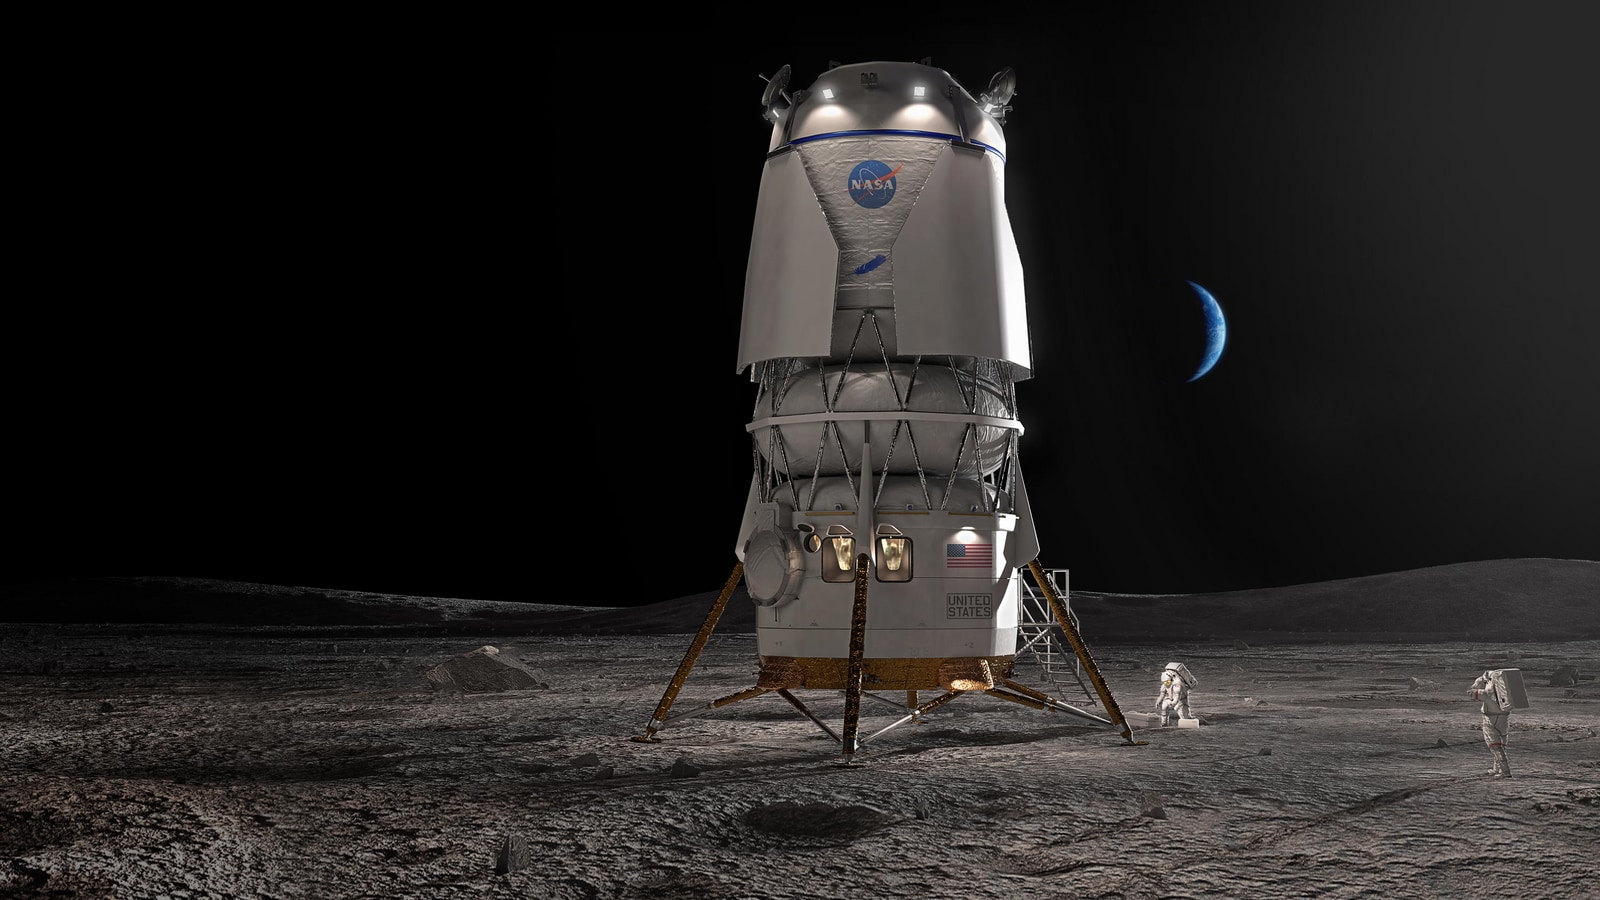 Jeff Bezos’ Blue Origin bags NASA contract to develop moon lander for astronauts | World News